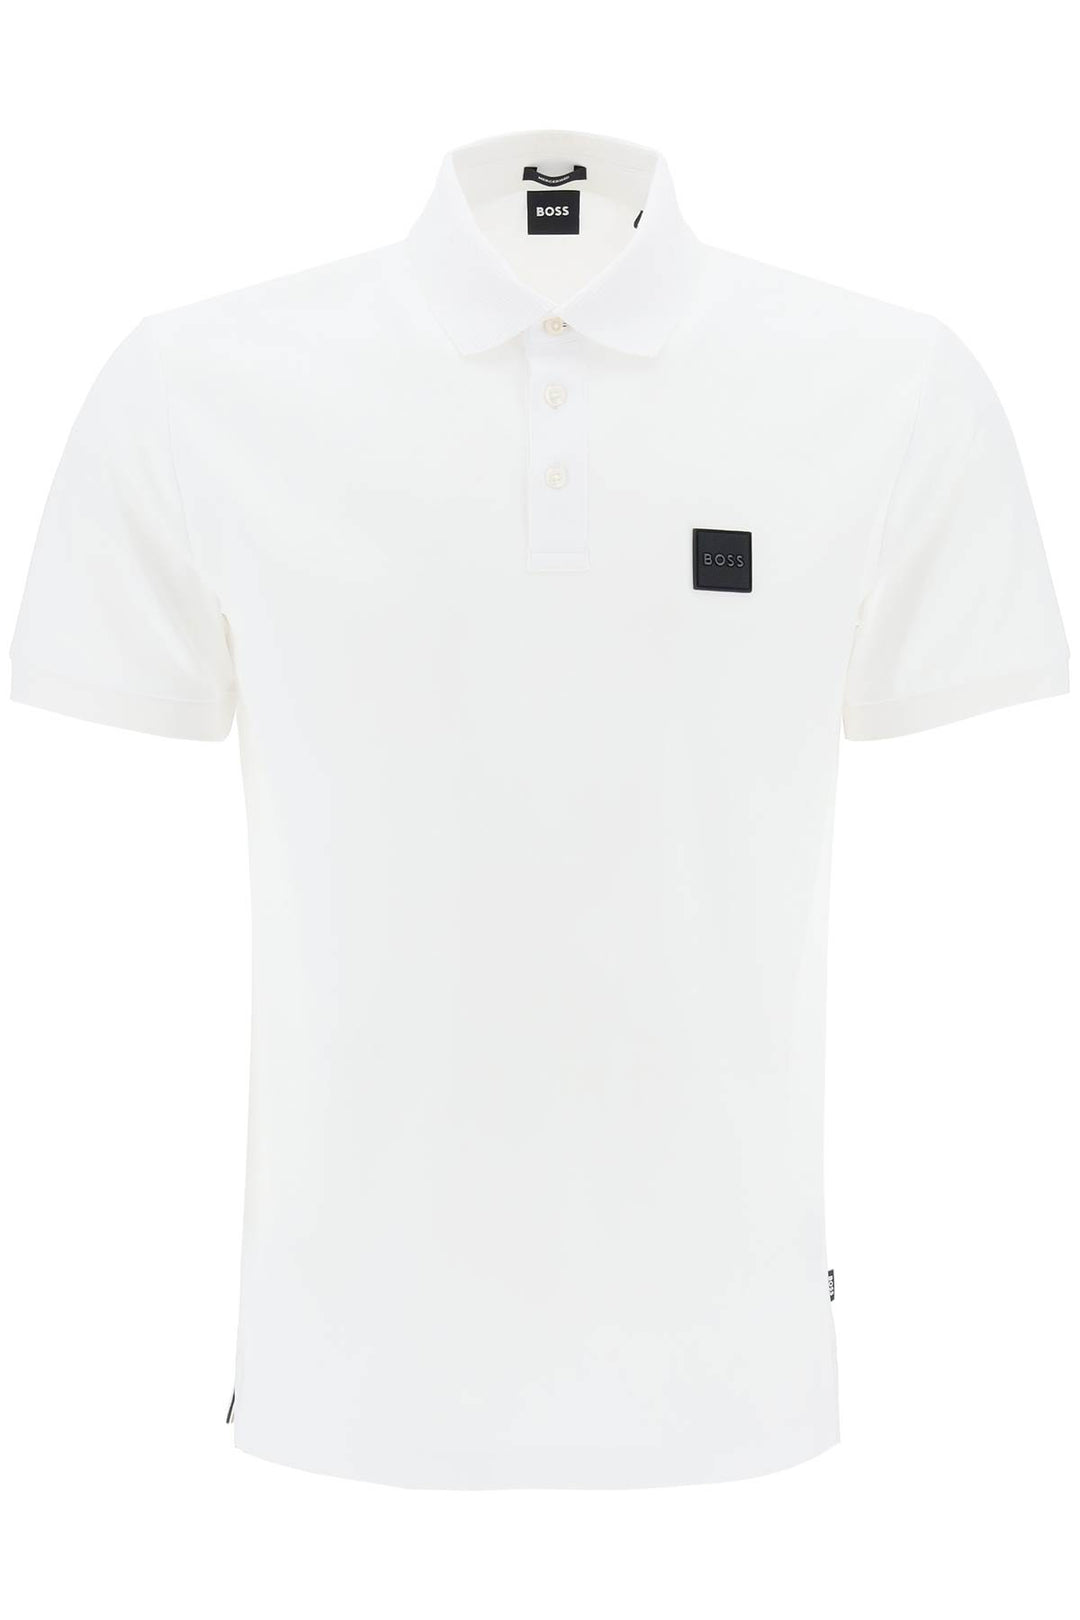 Boss Mercerized Cotton Polo Shirt   White